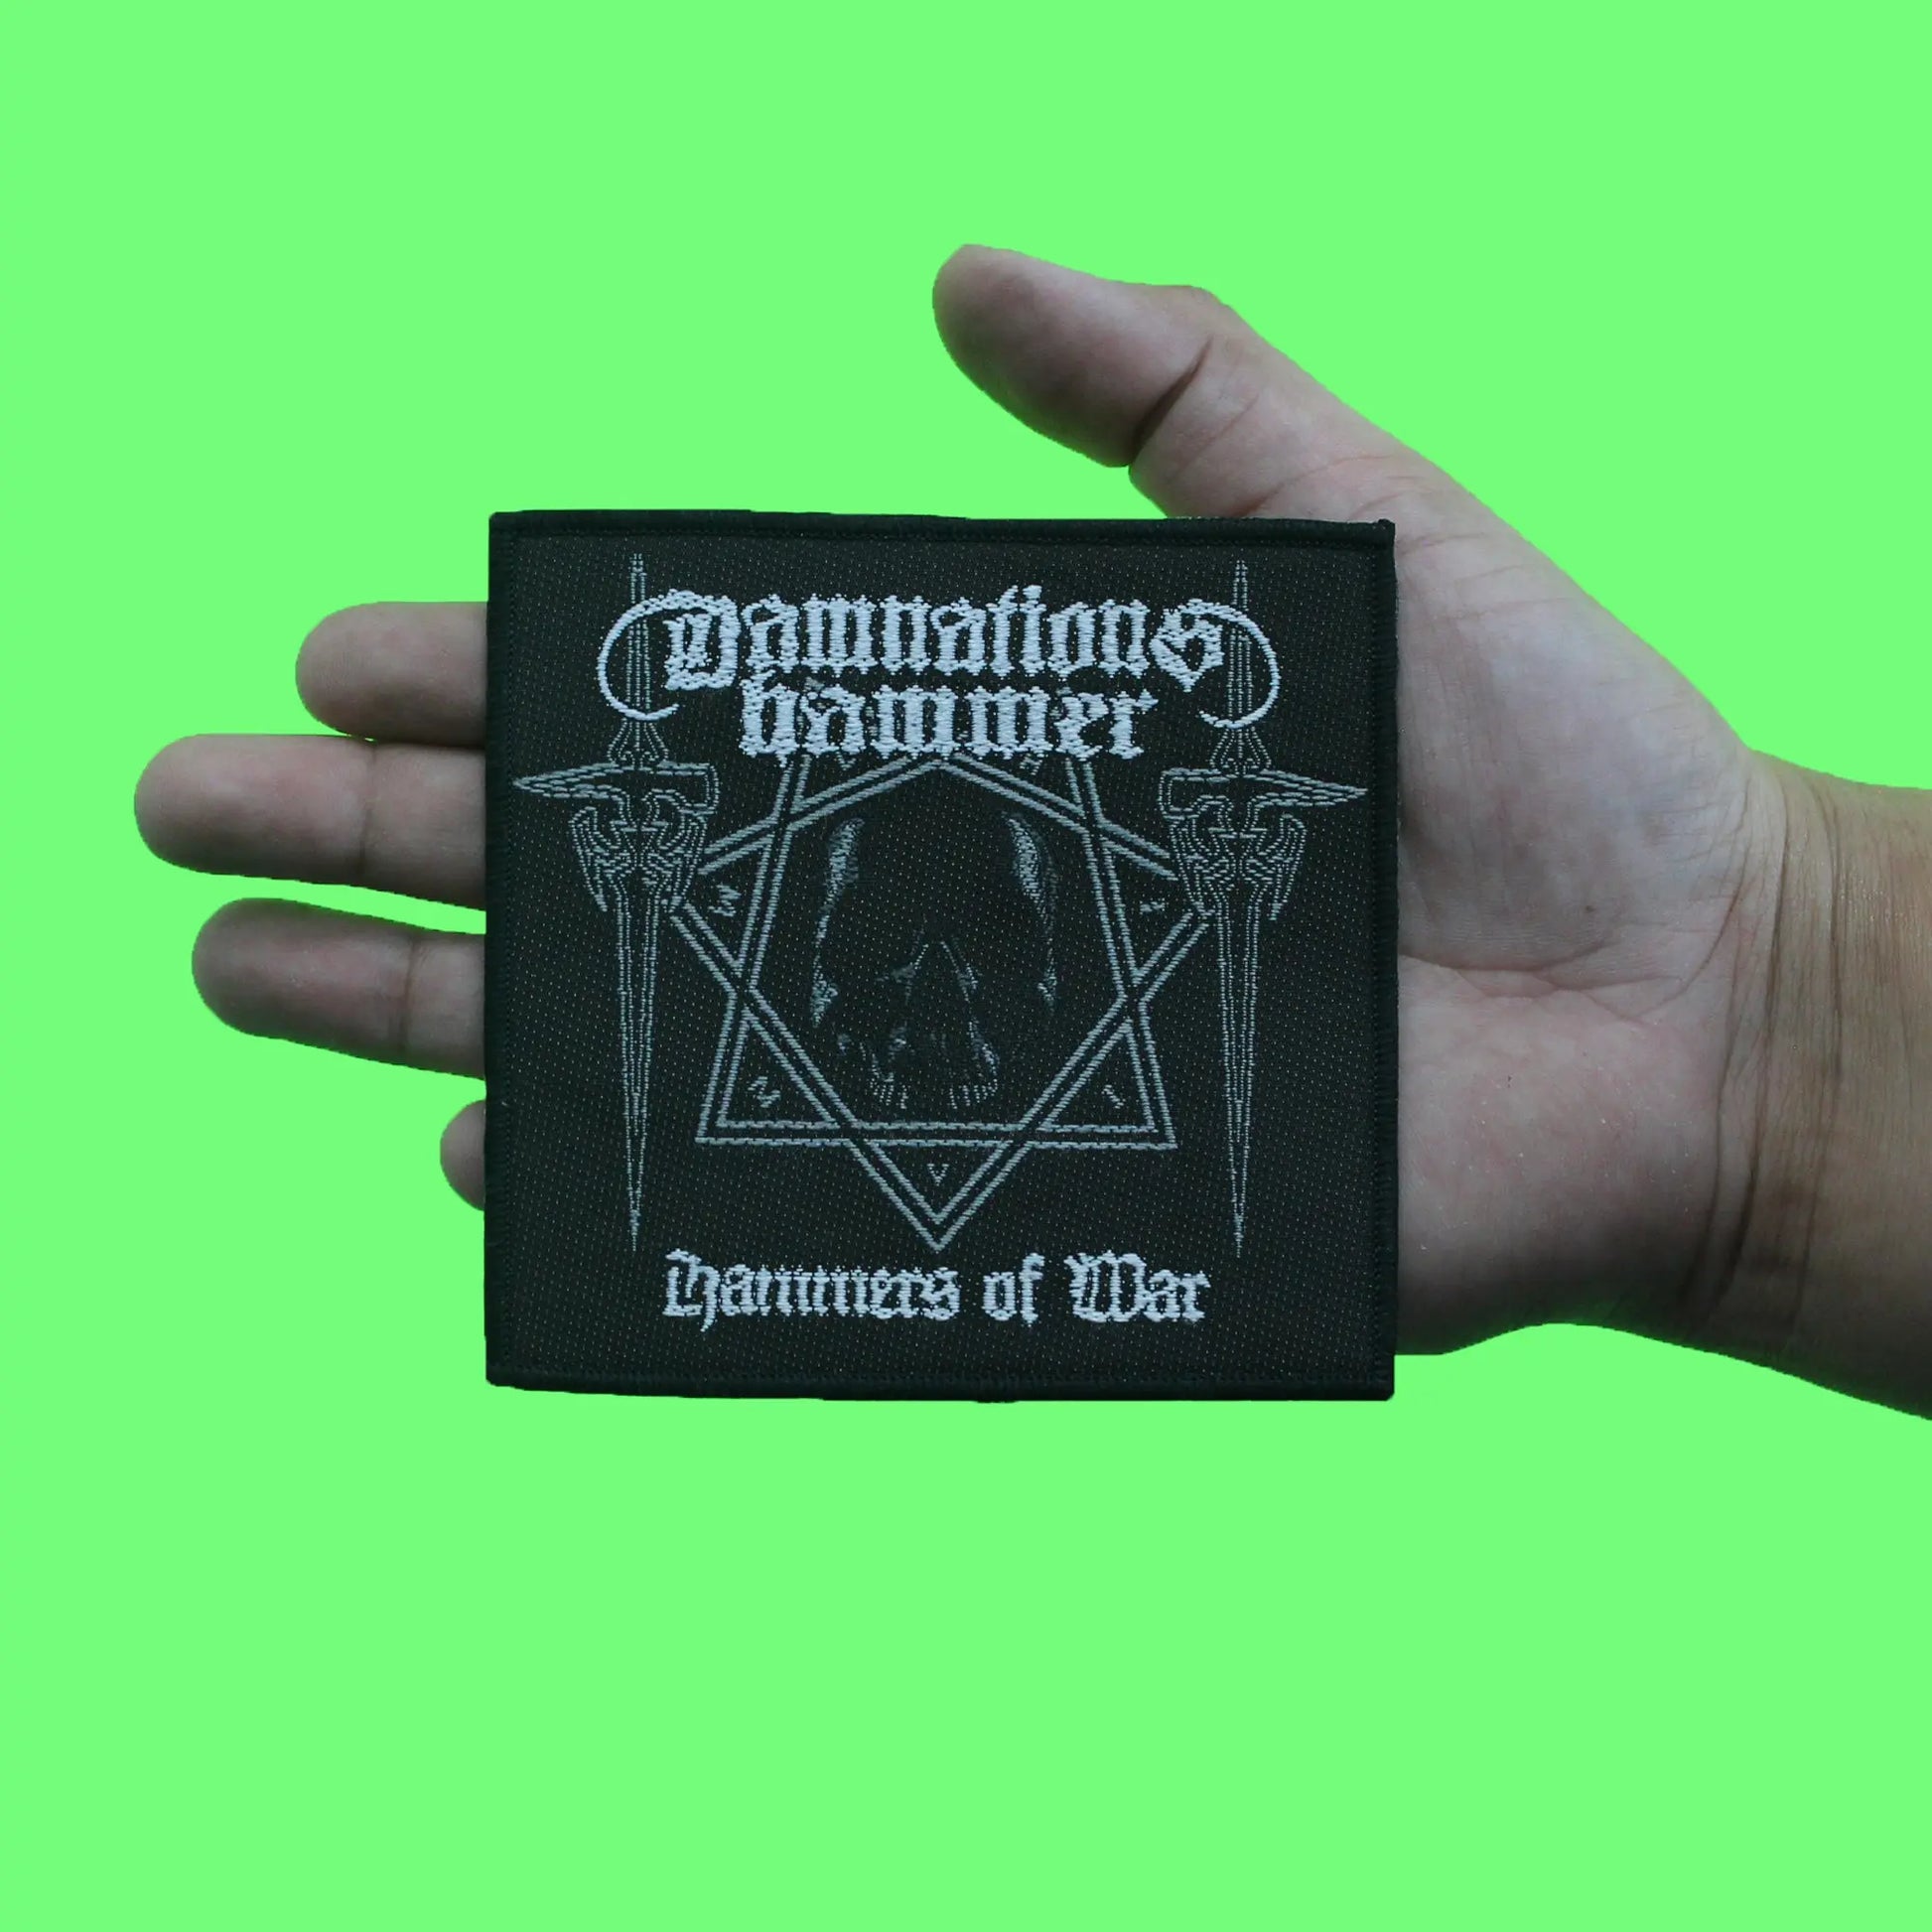 Damnation's Hammer Standard Band Patch Hammer Of War Woven Iron On